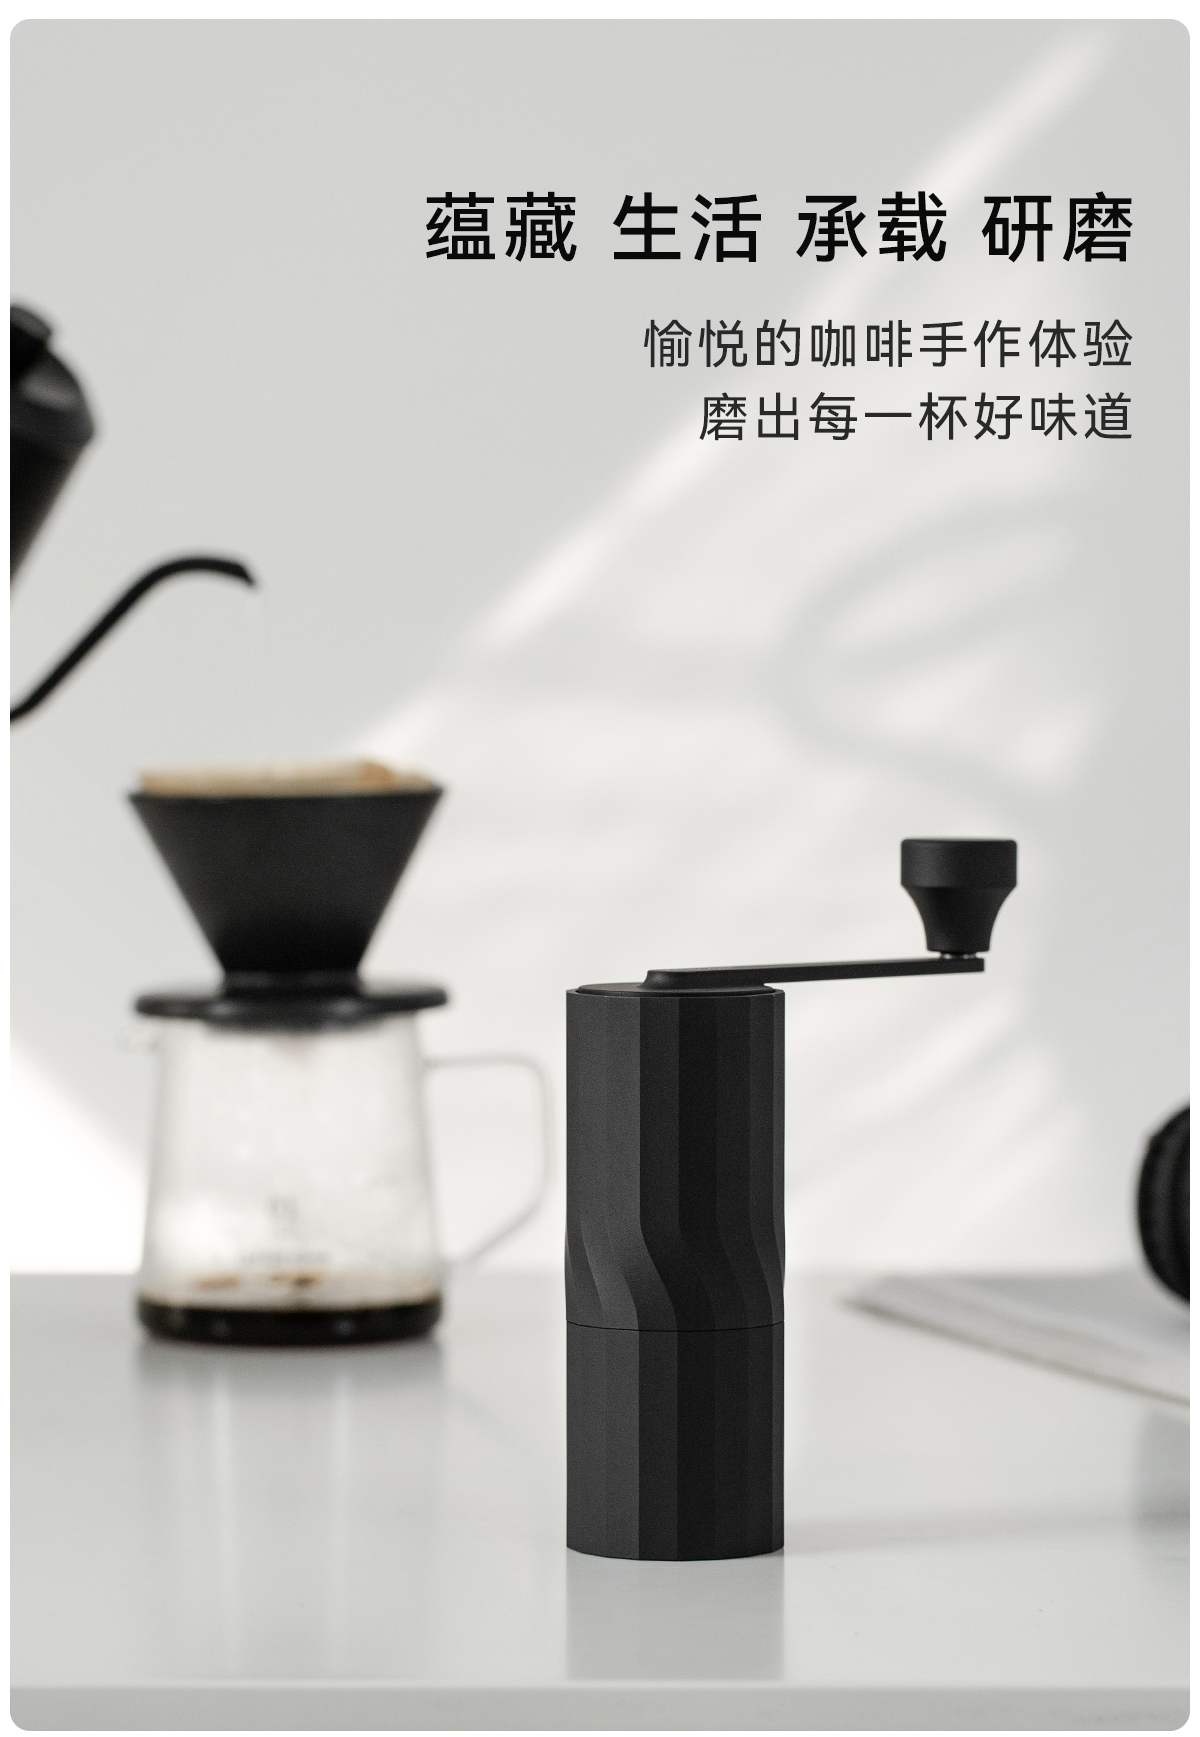 CAFEDE KONA M2Pro手摇磨豆机手冲咖啡家用便携咖啡豆研磨机手动